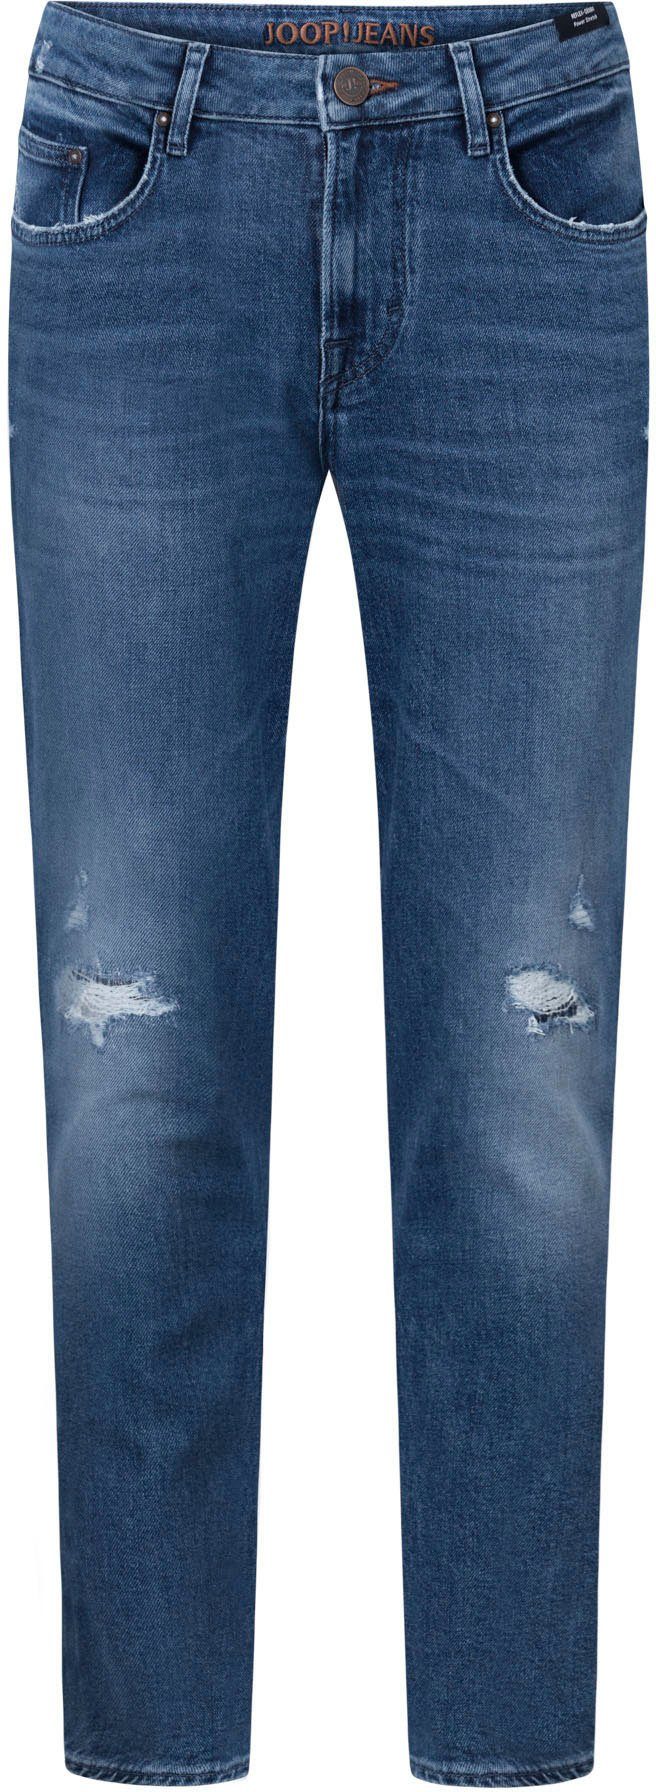 Joop Jeans Straight-Jeans in Form 5-Pocket